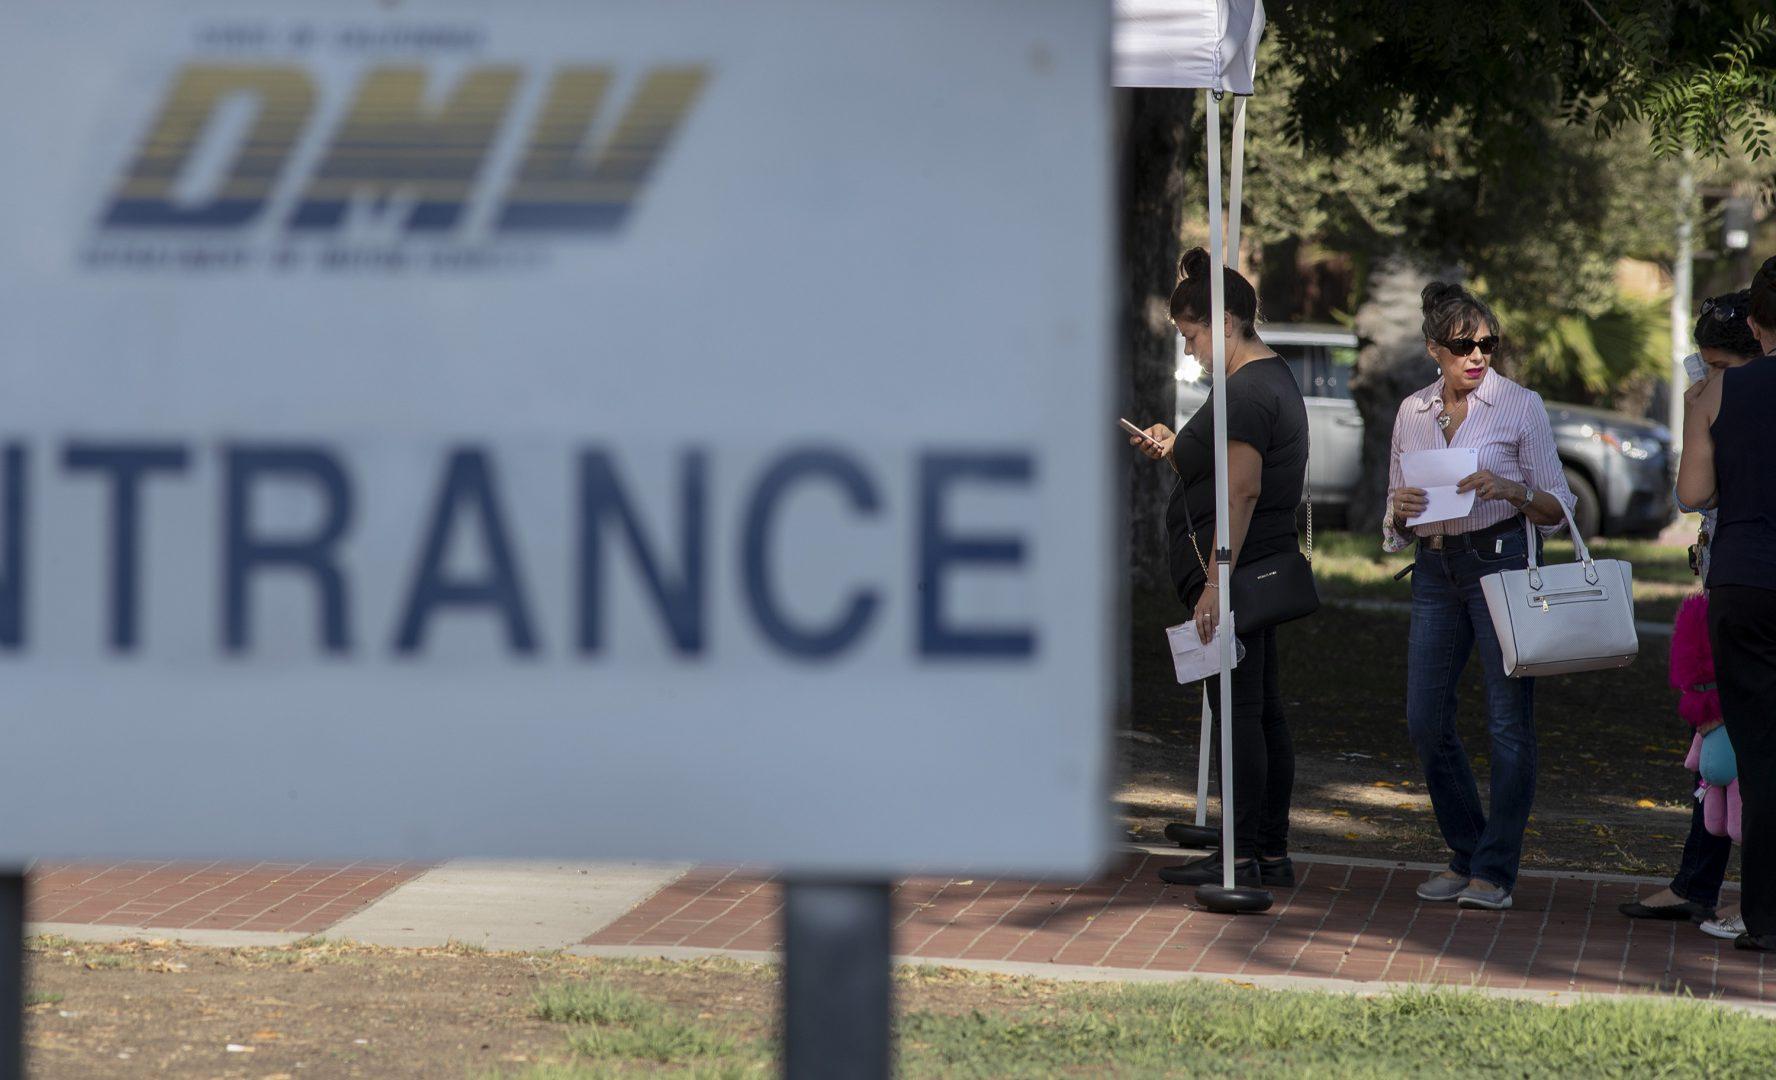 People wait in line for DMV service in Winnetka on Sept. 5. (Brian van der Brug/Los Angeles Times/TNS)